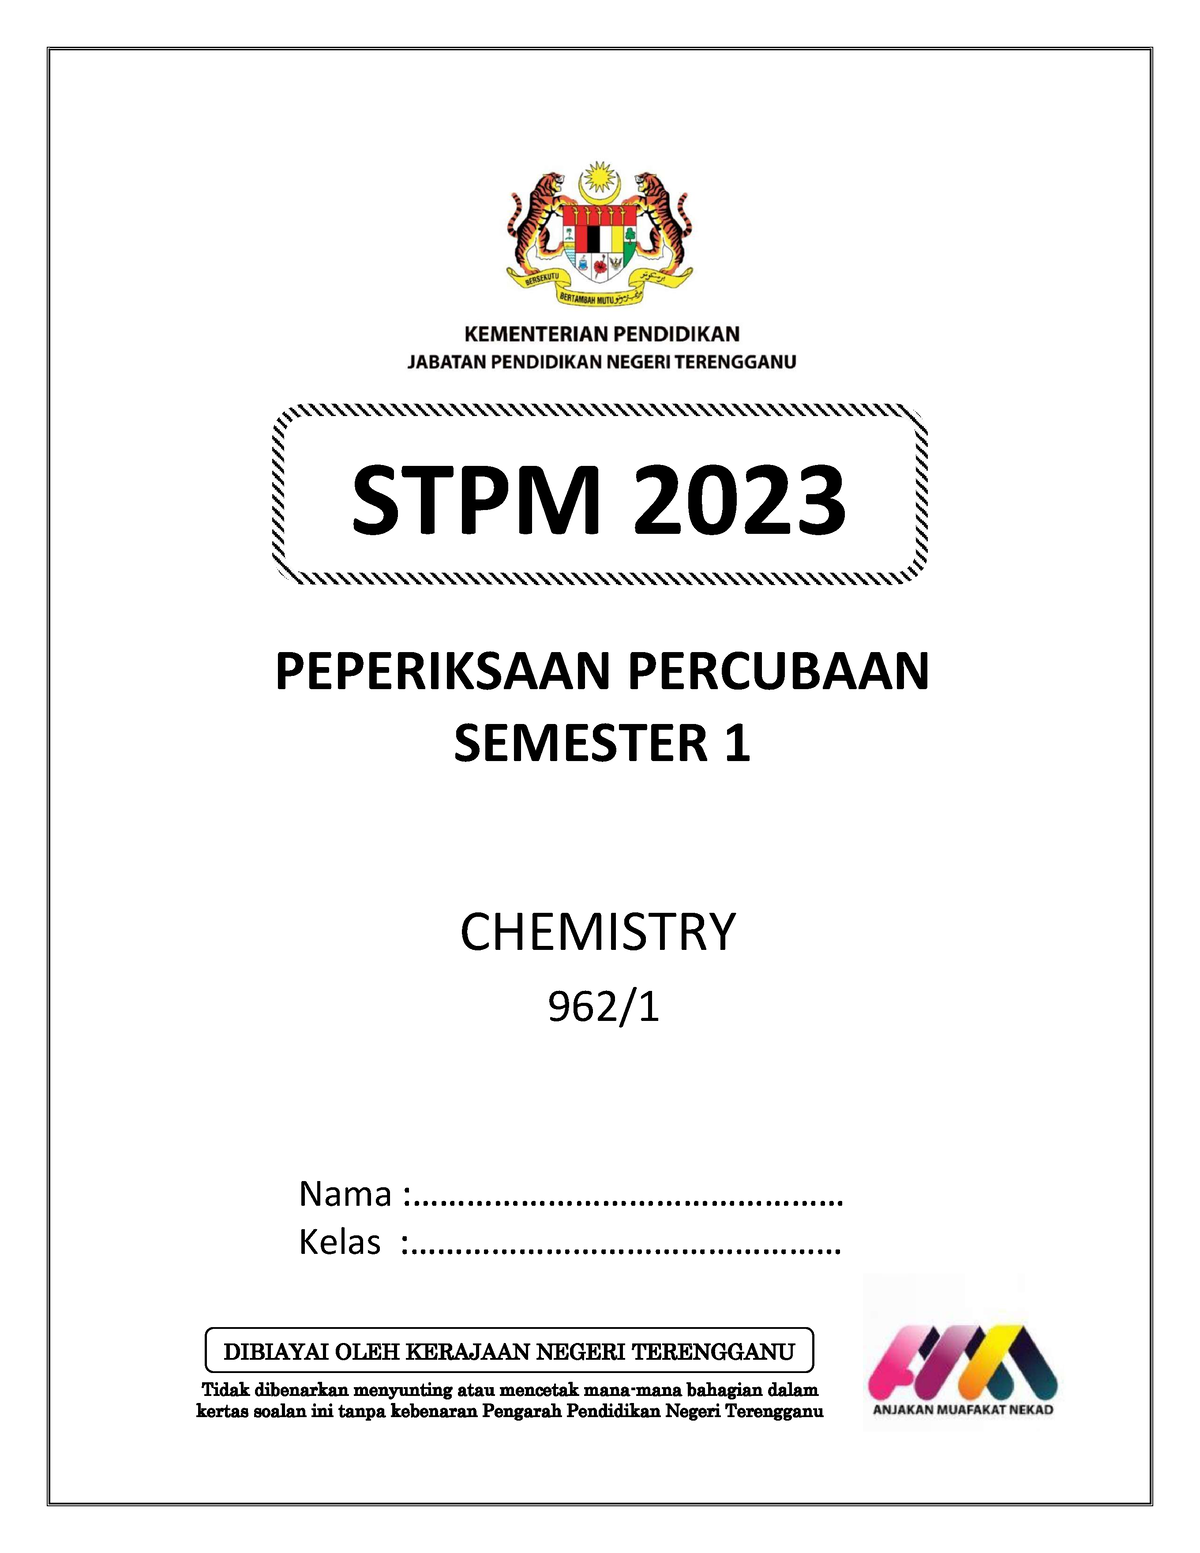 chemistry coursework stpm 2021 sem 1